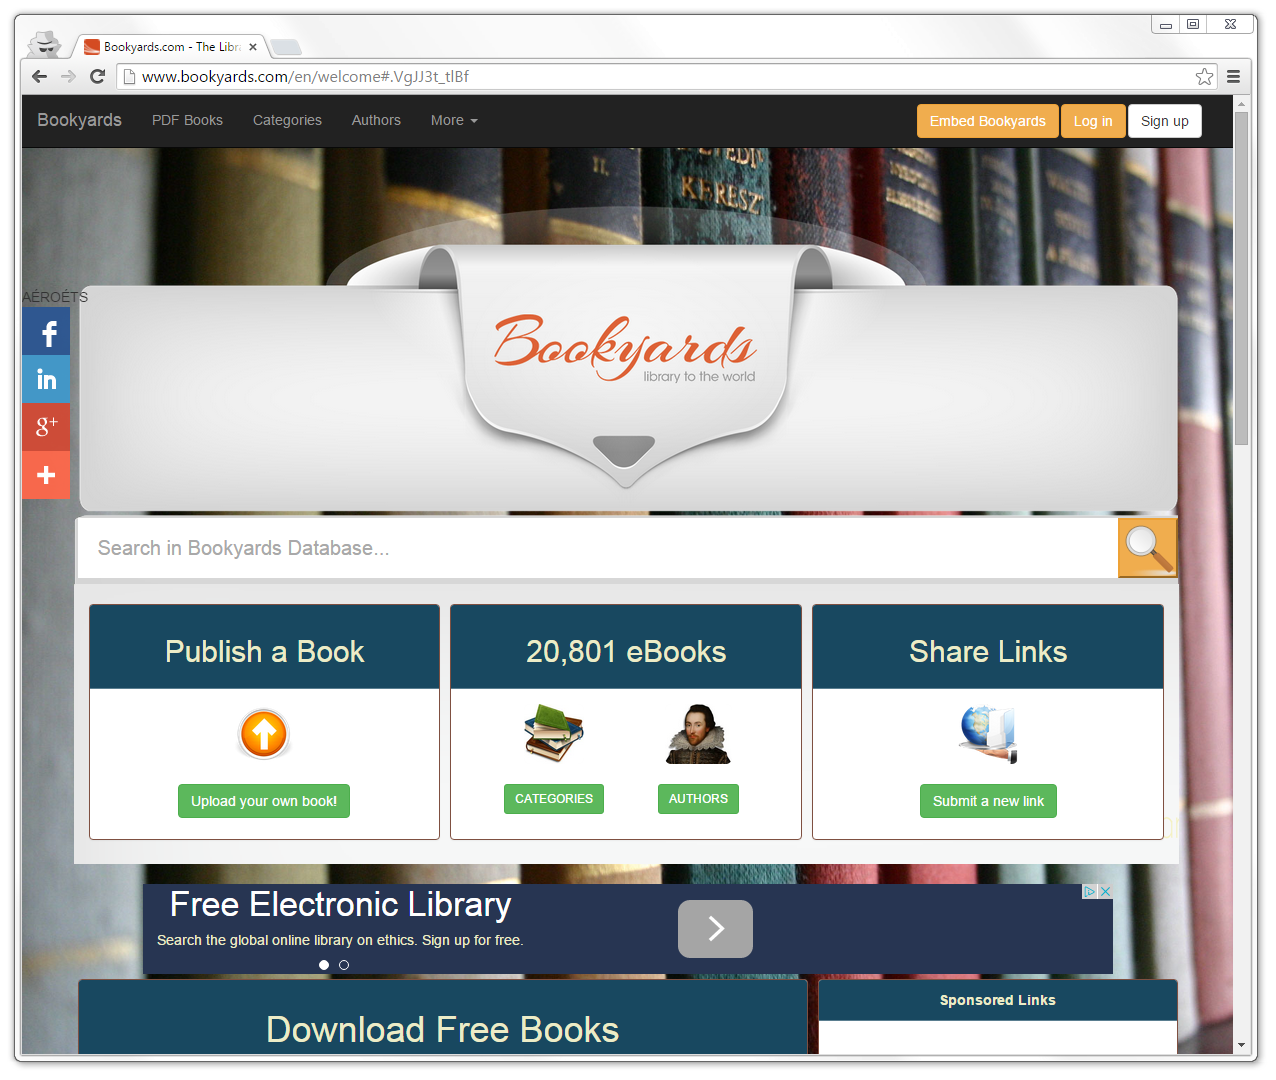 www.bookyards.com